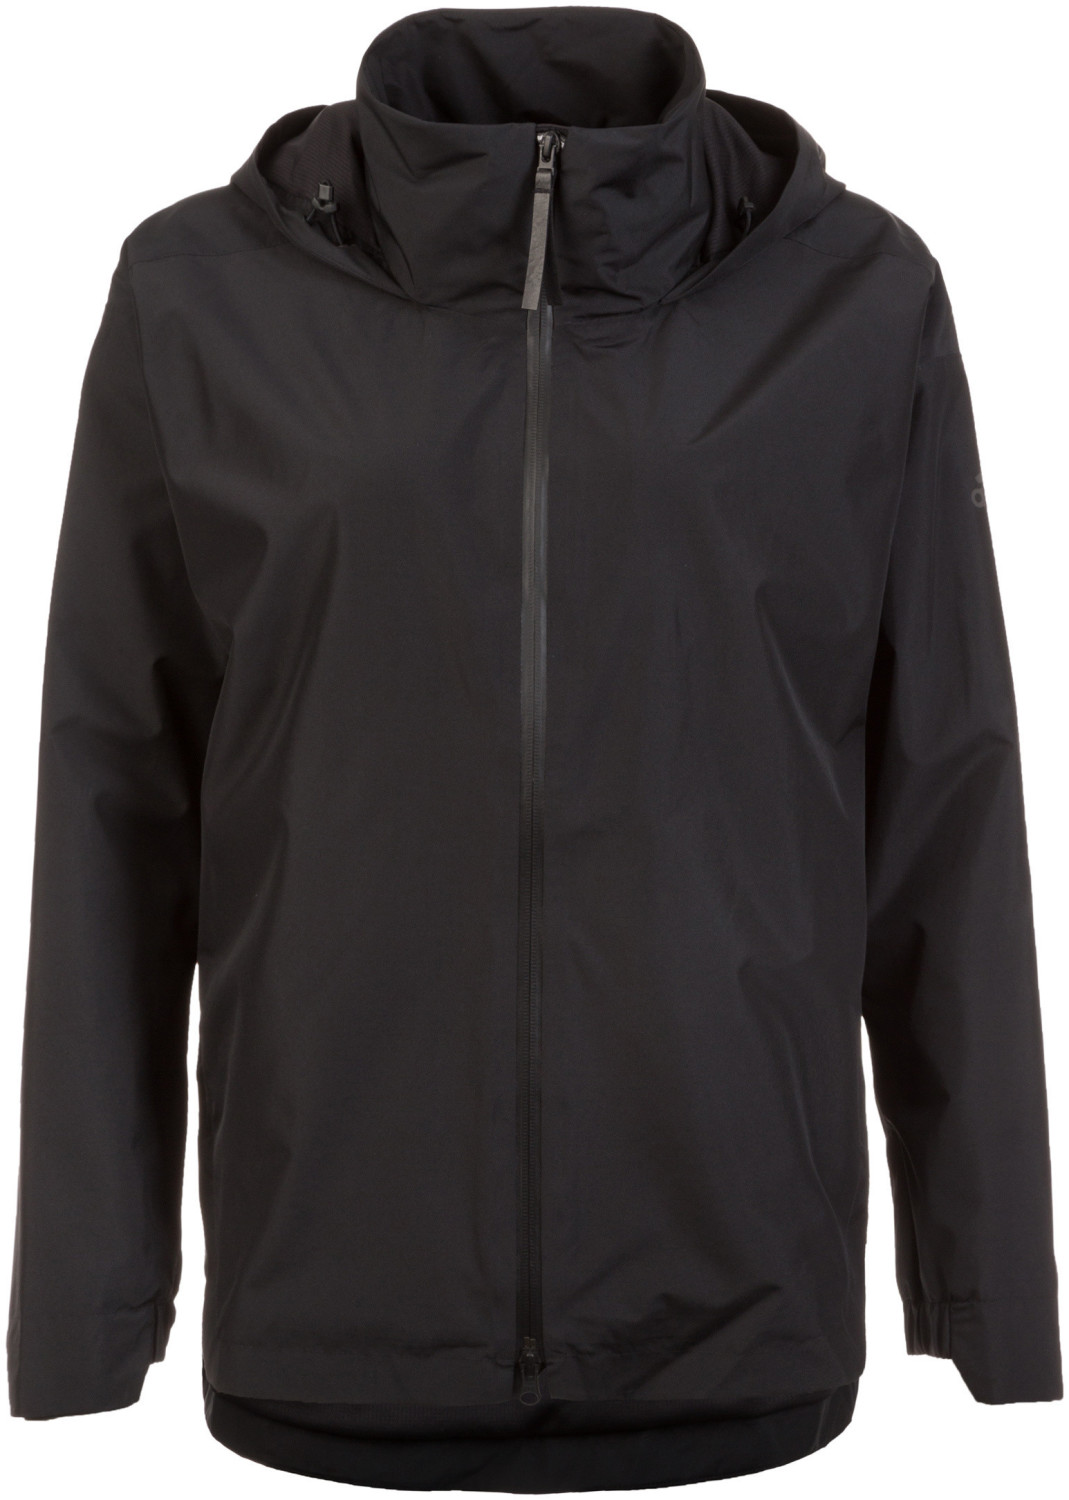 Adidas Women's Urban Climaproof Rain Jacket black (DQ1615)